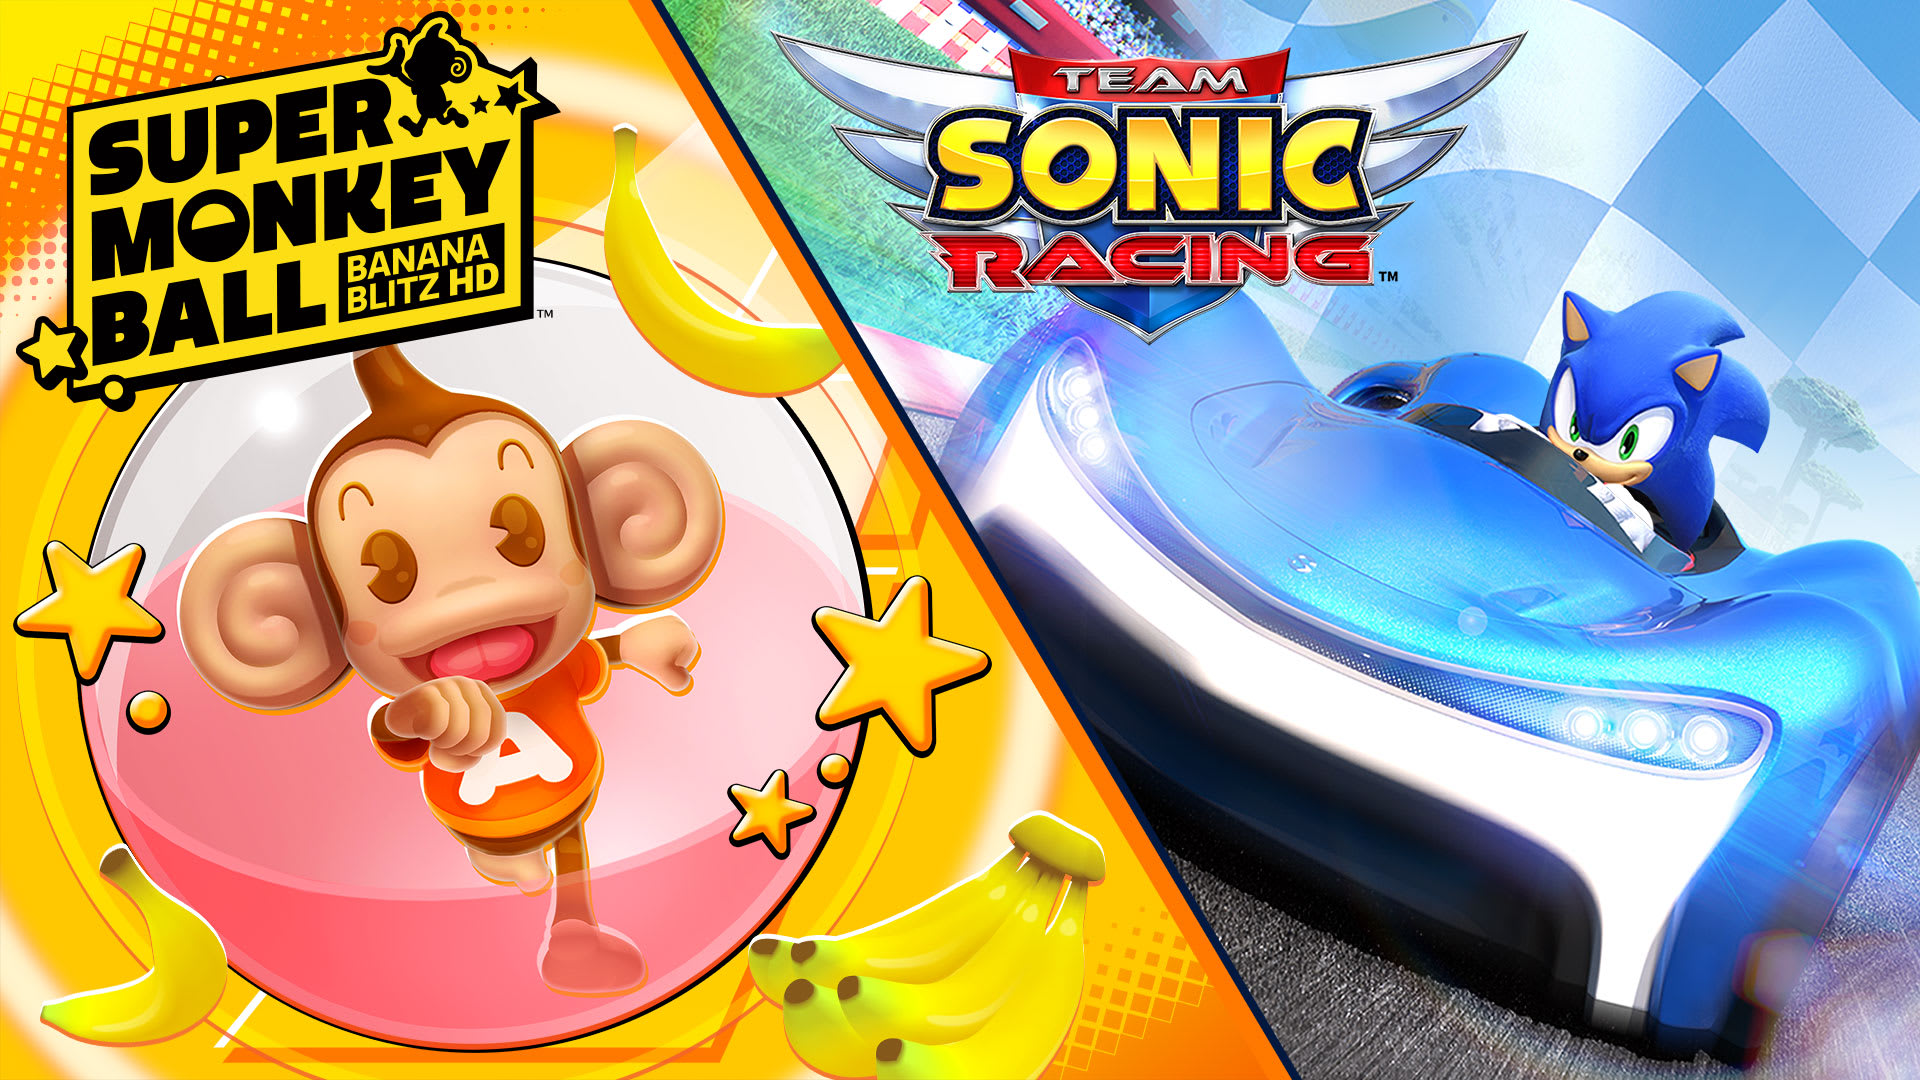 Team Sonic Racing + Super Monkey Ball: Banana Blitz HD Bundle